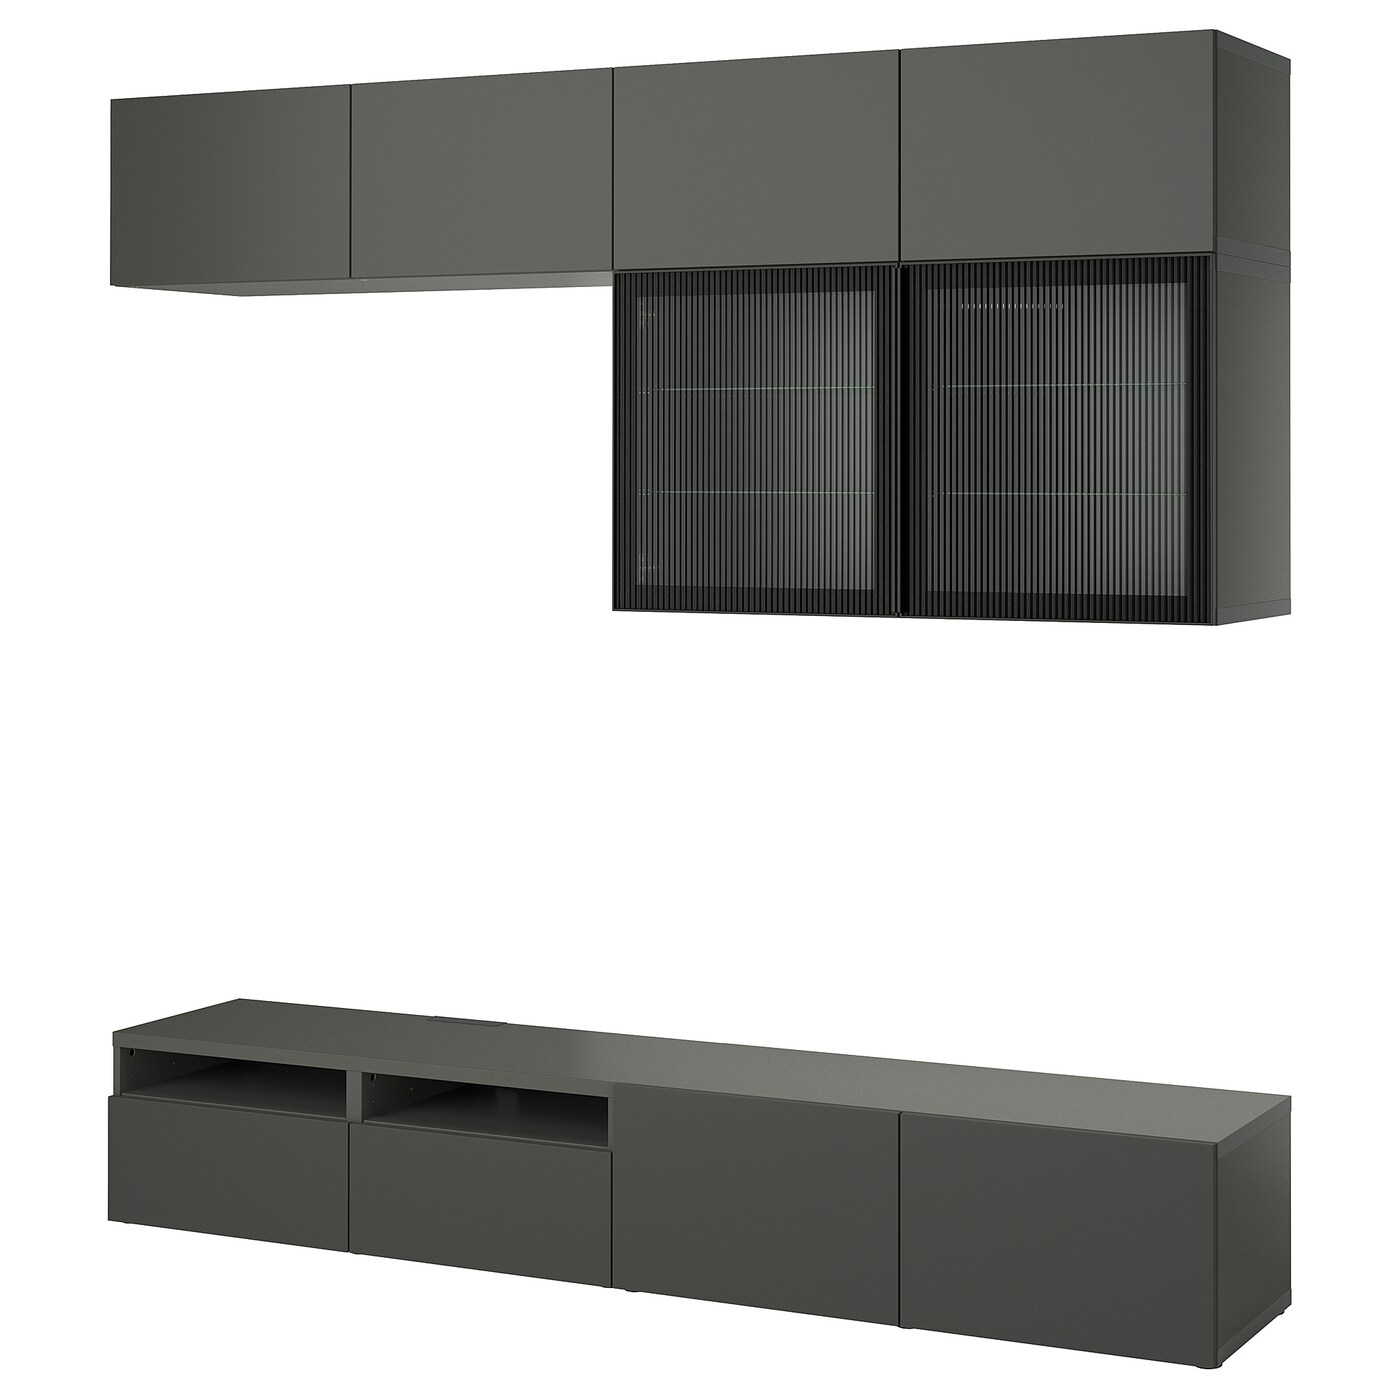 Комбинация для хранения ТВ - IKEA BESTÅ/BESTA, 231x42x240см, темно-серый, БЕСТО ИКЕА